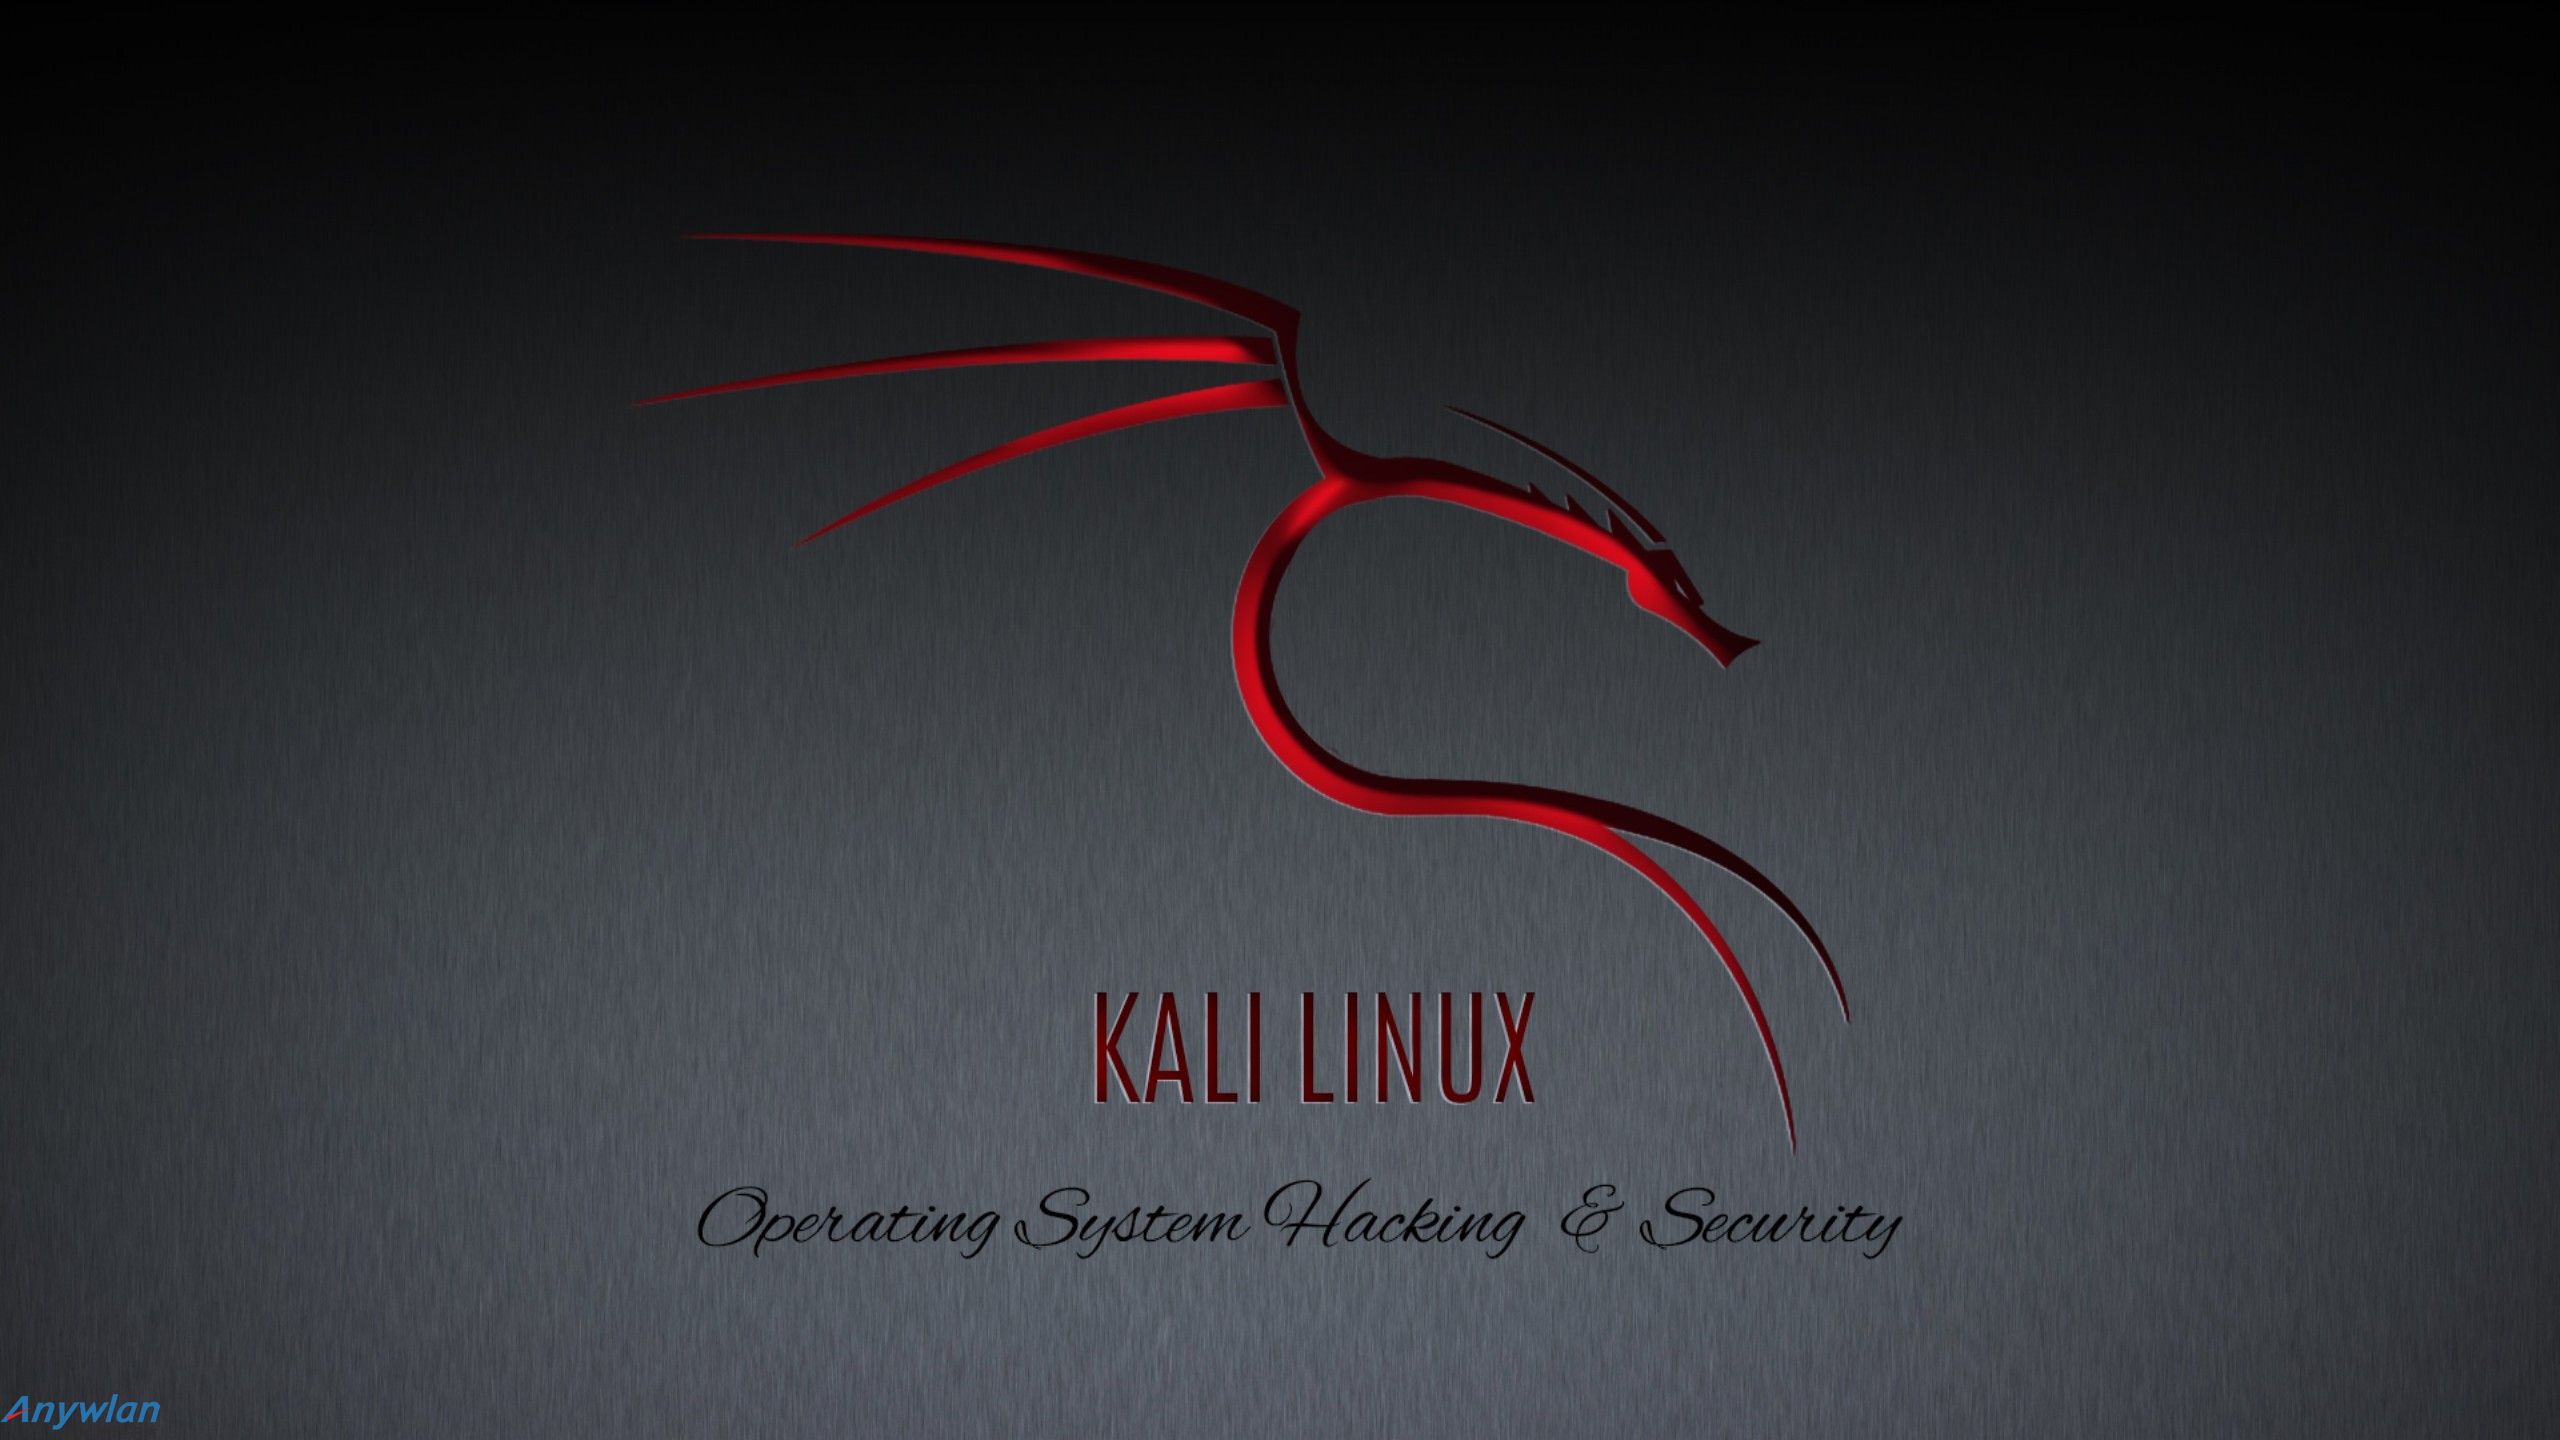 BackTrack and Kali Linux